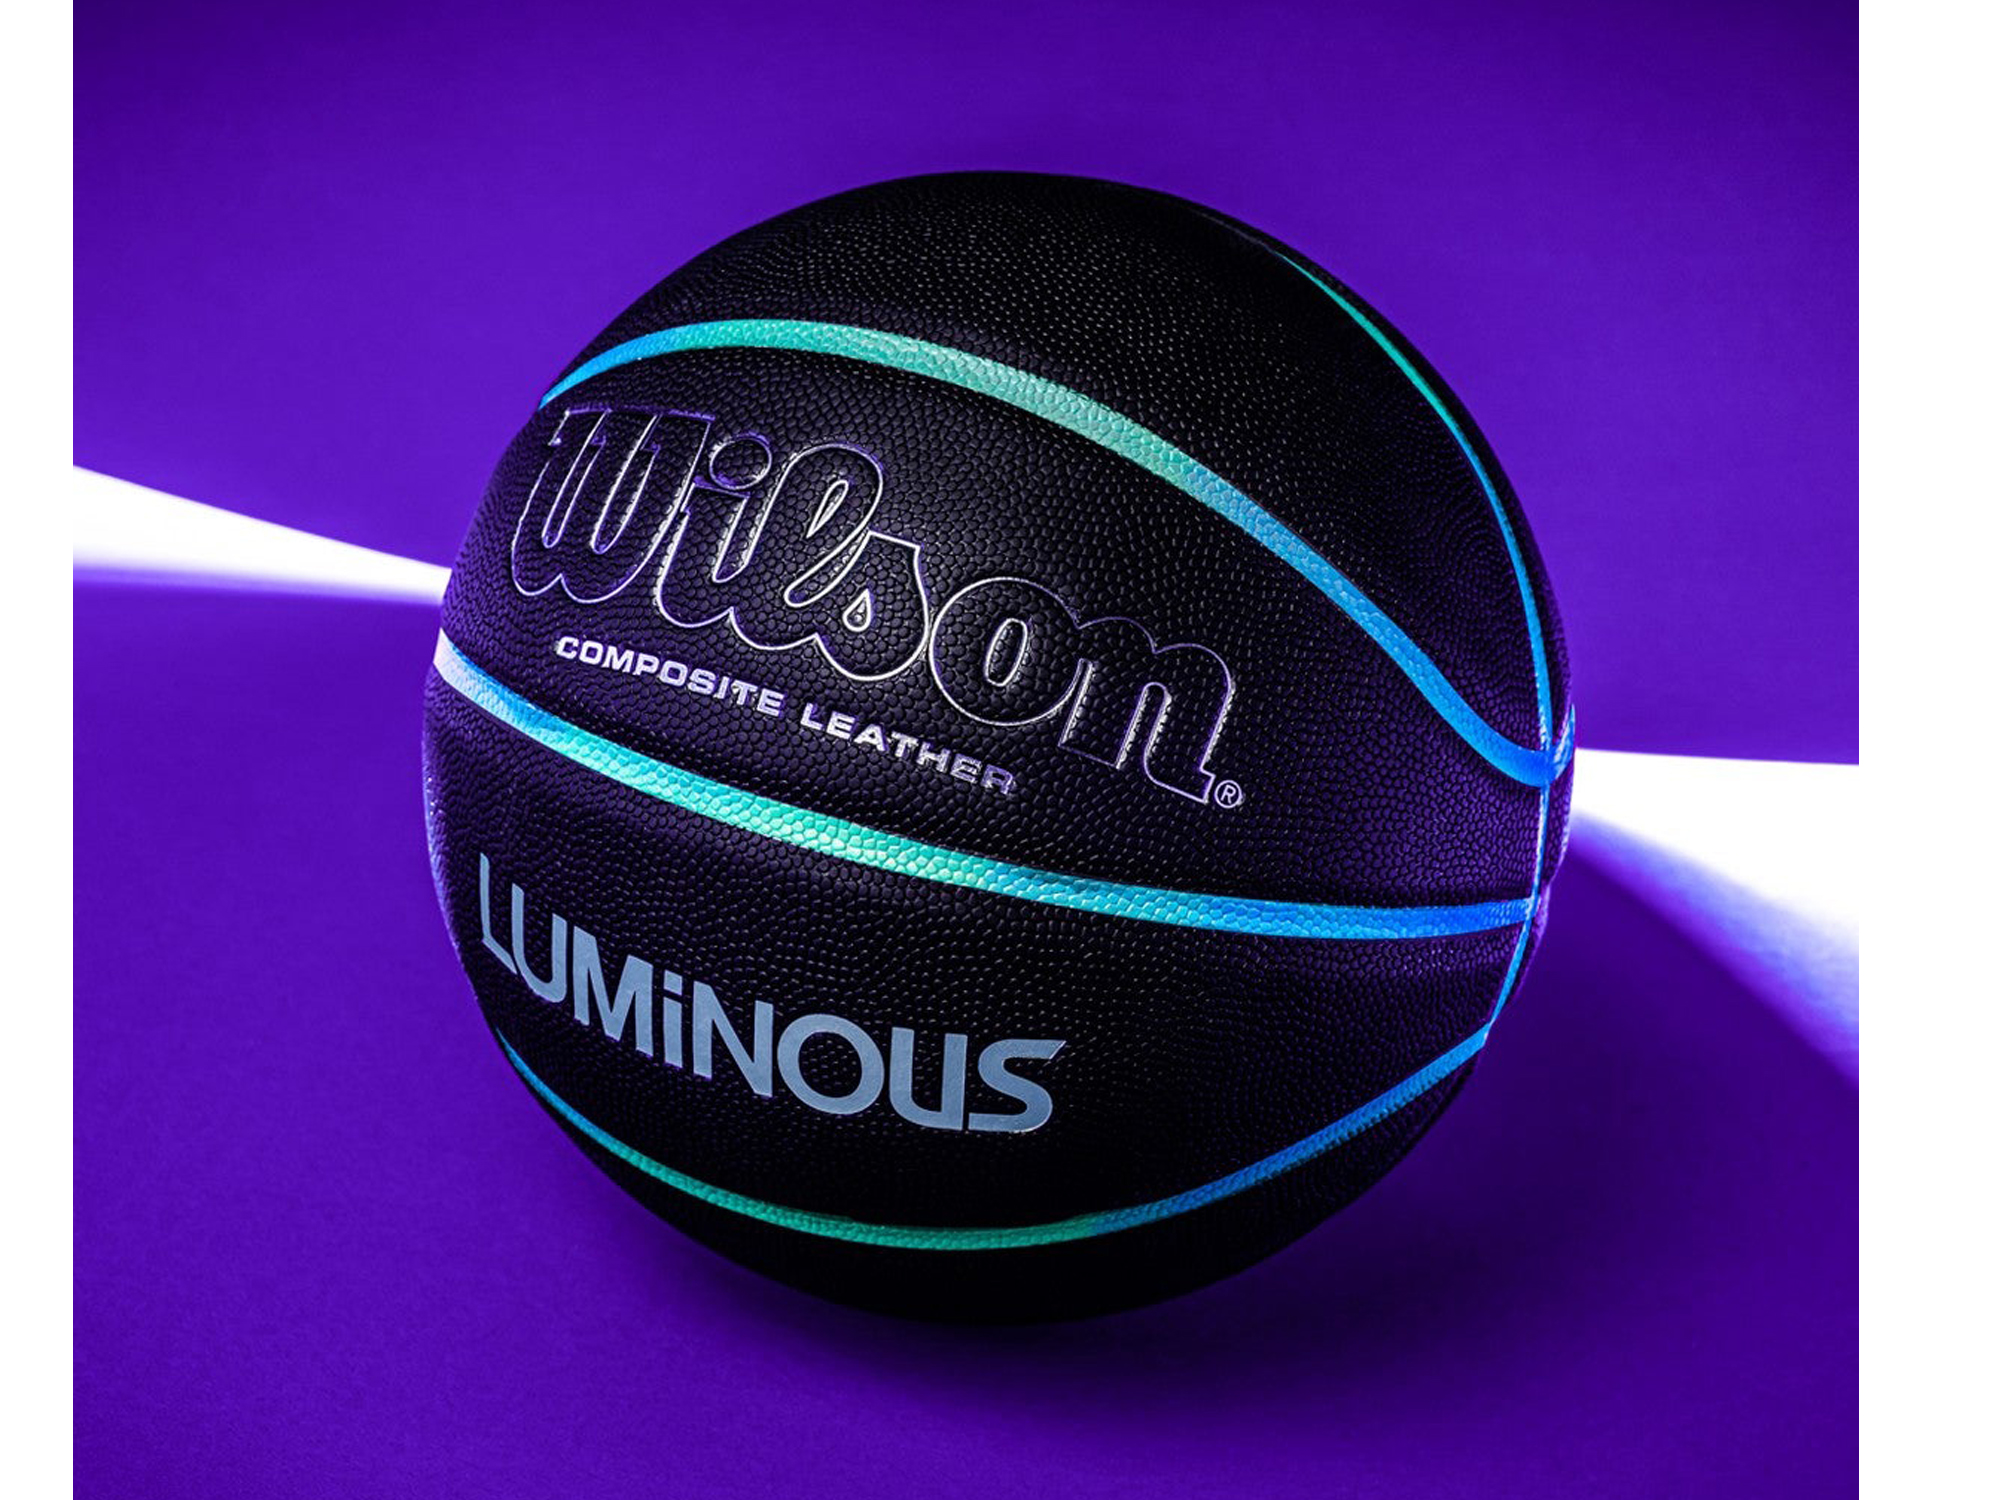 Wilson Luminous Performance Basketball